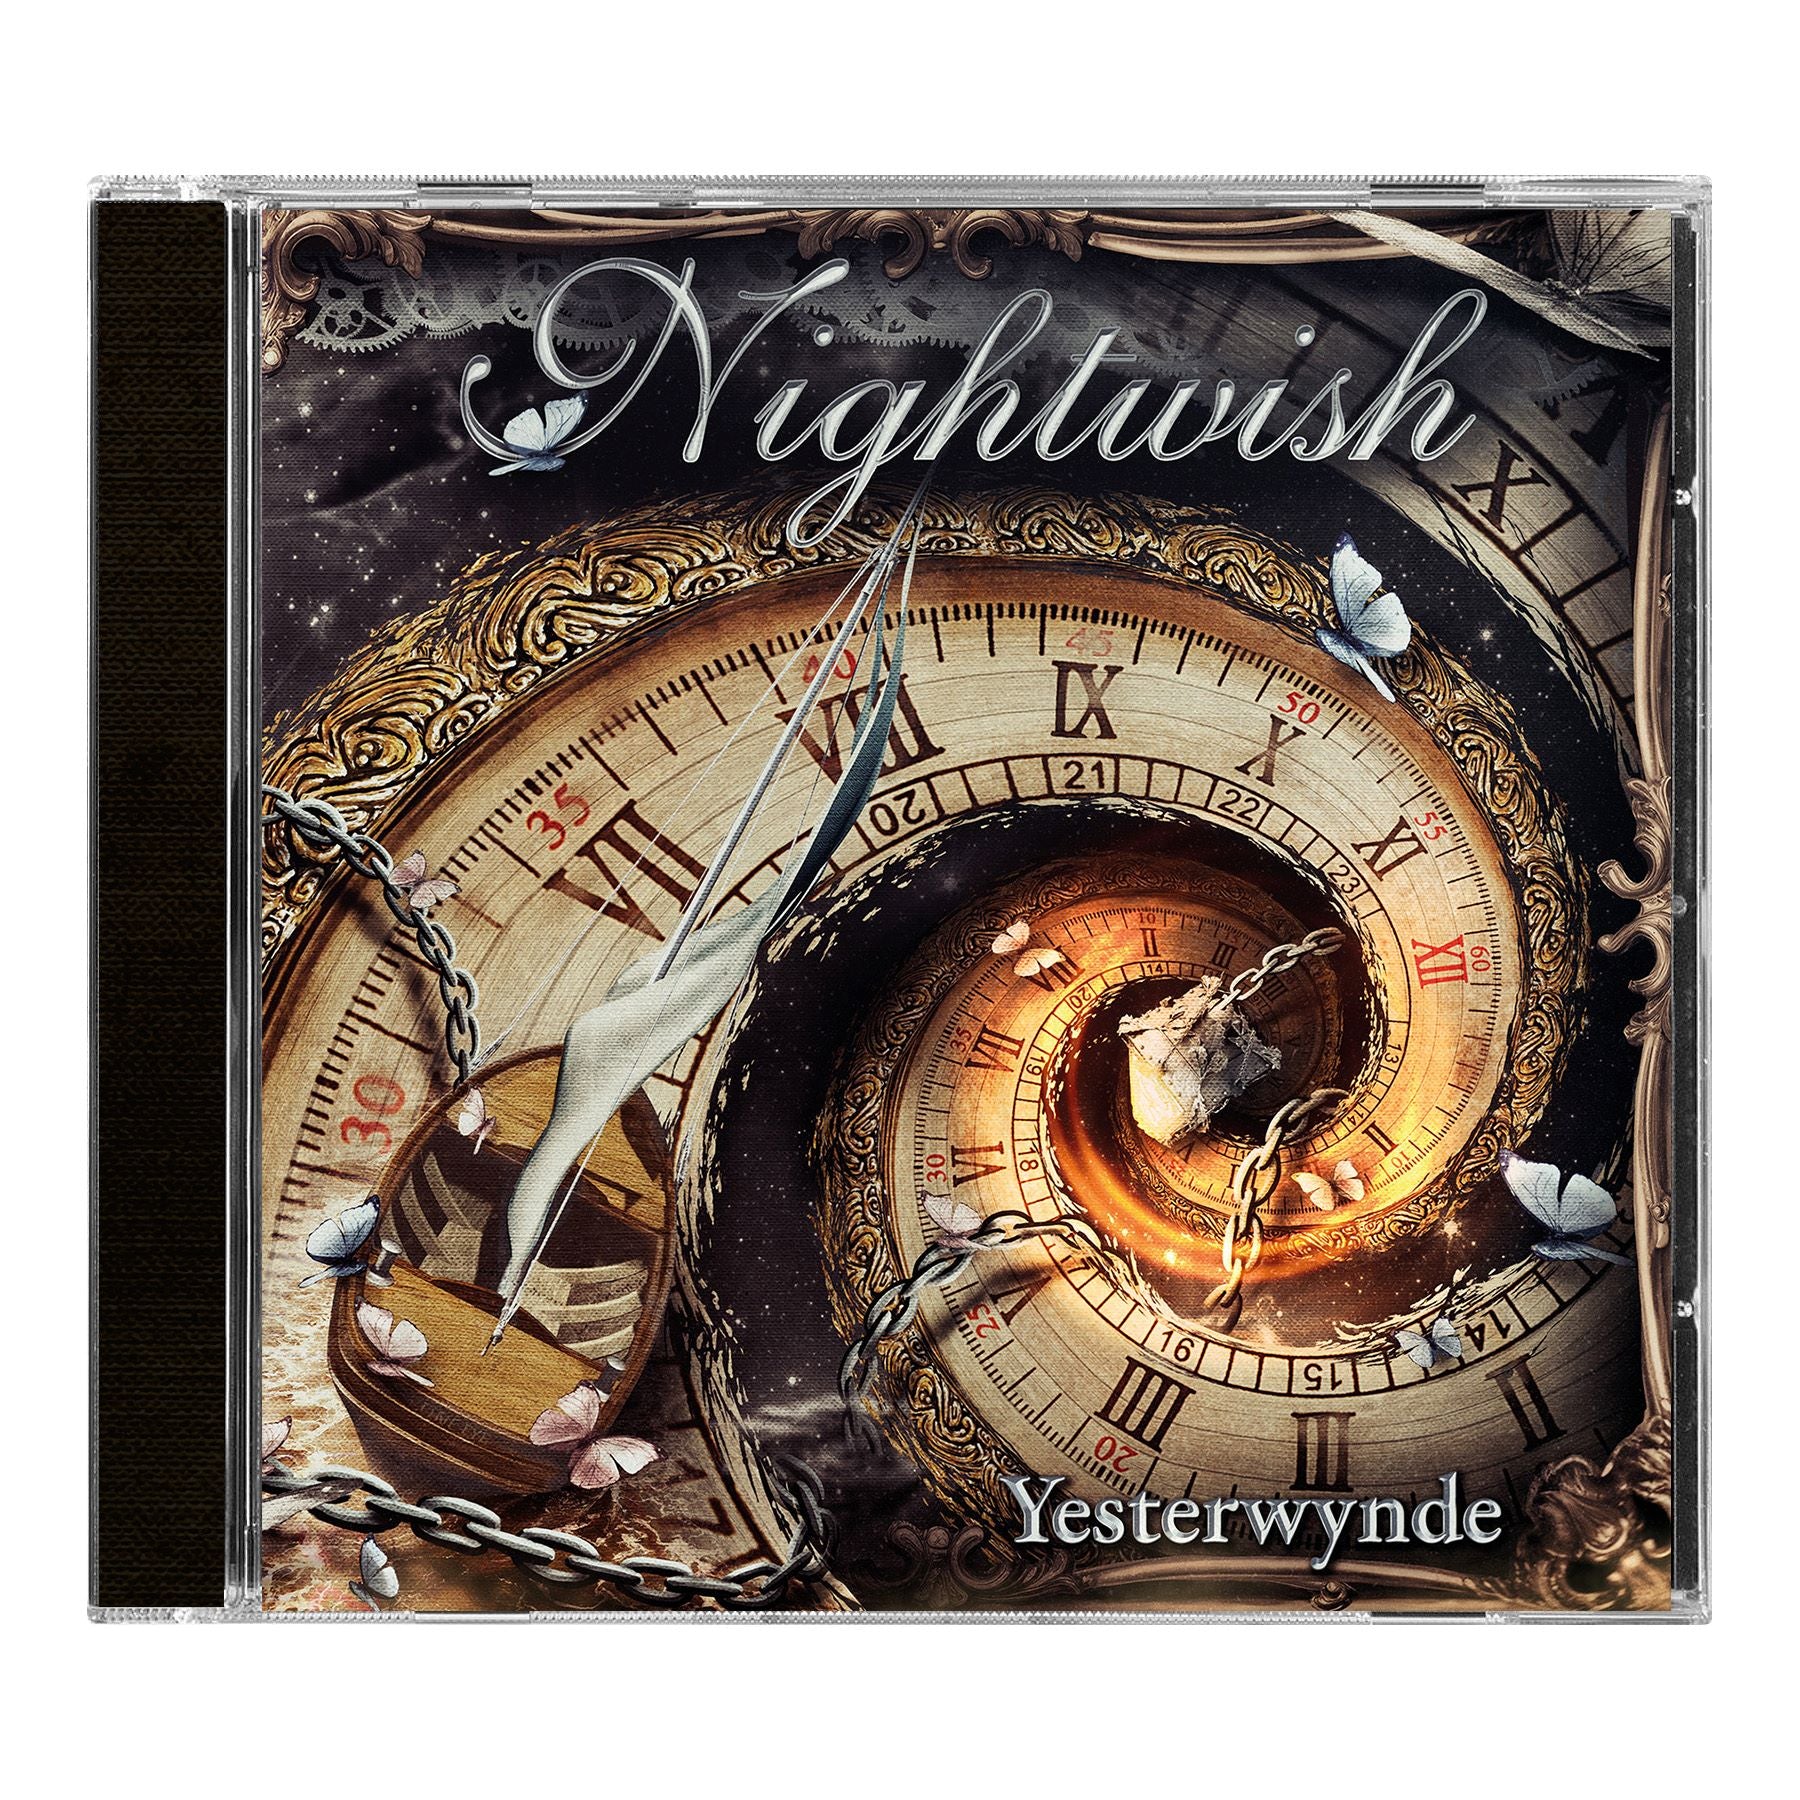 Nightwish - Yesterwynde: CD